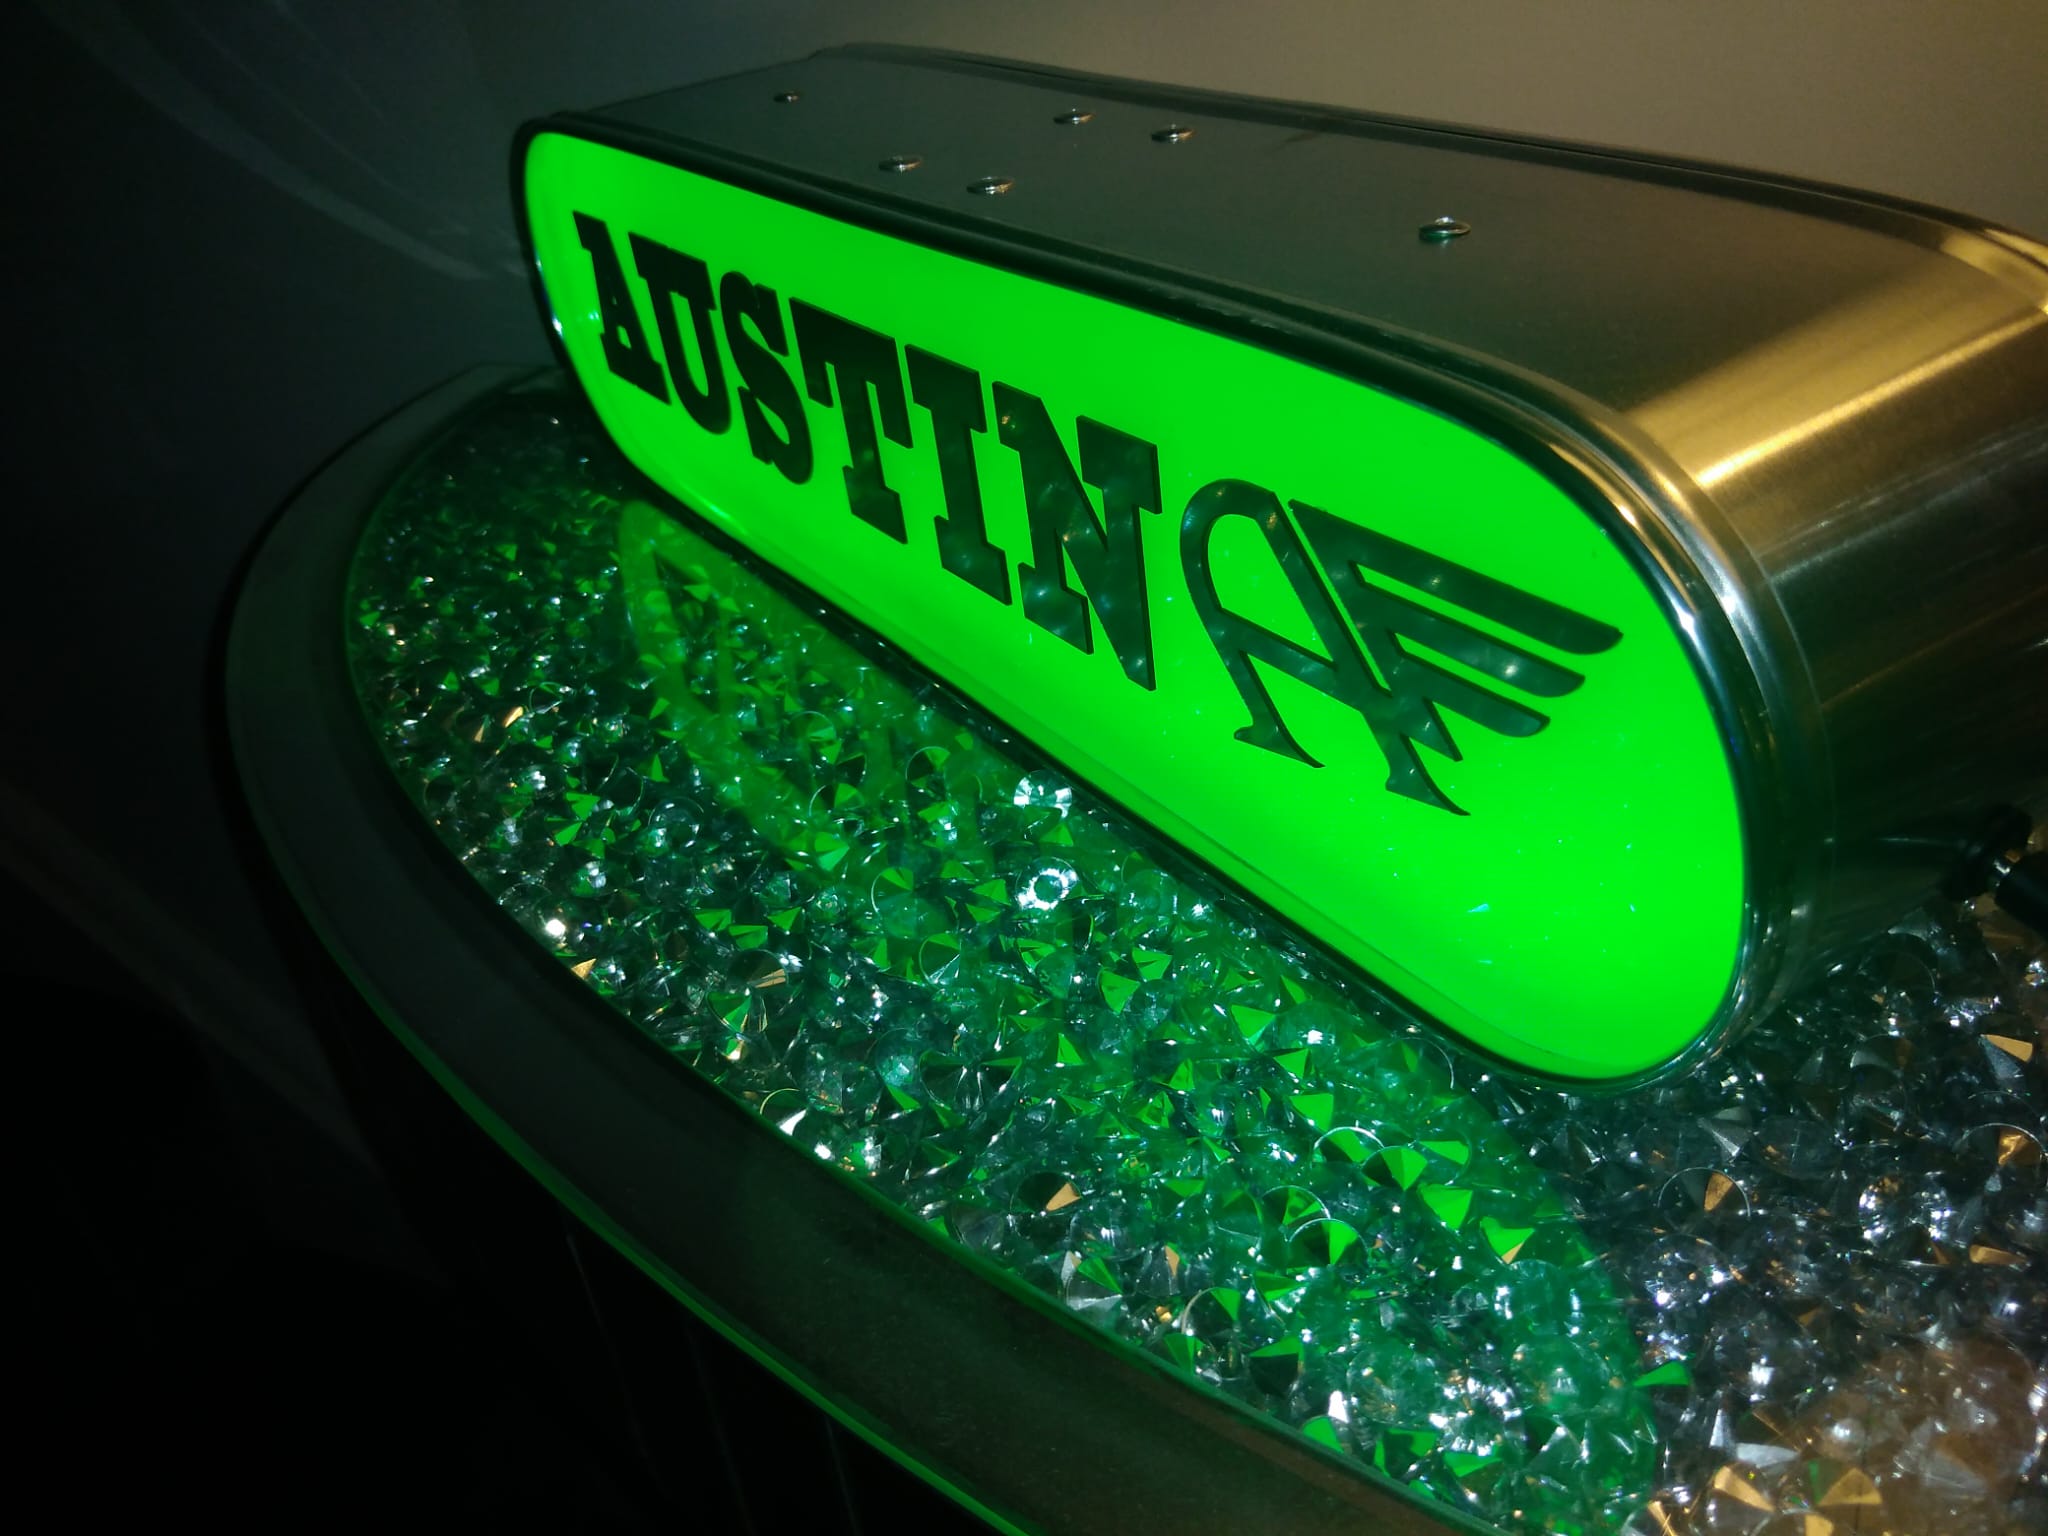 Austin logo light for sale Evoke Classics Classic Cars Auctions